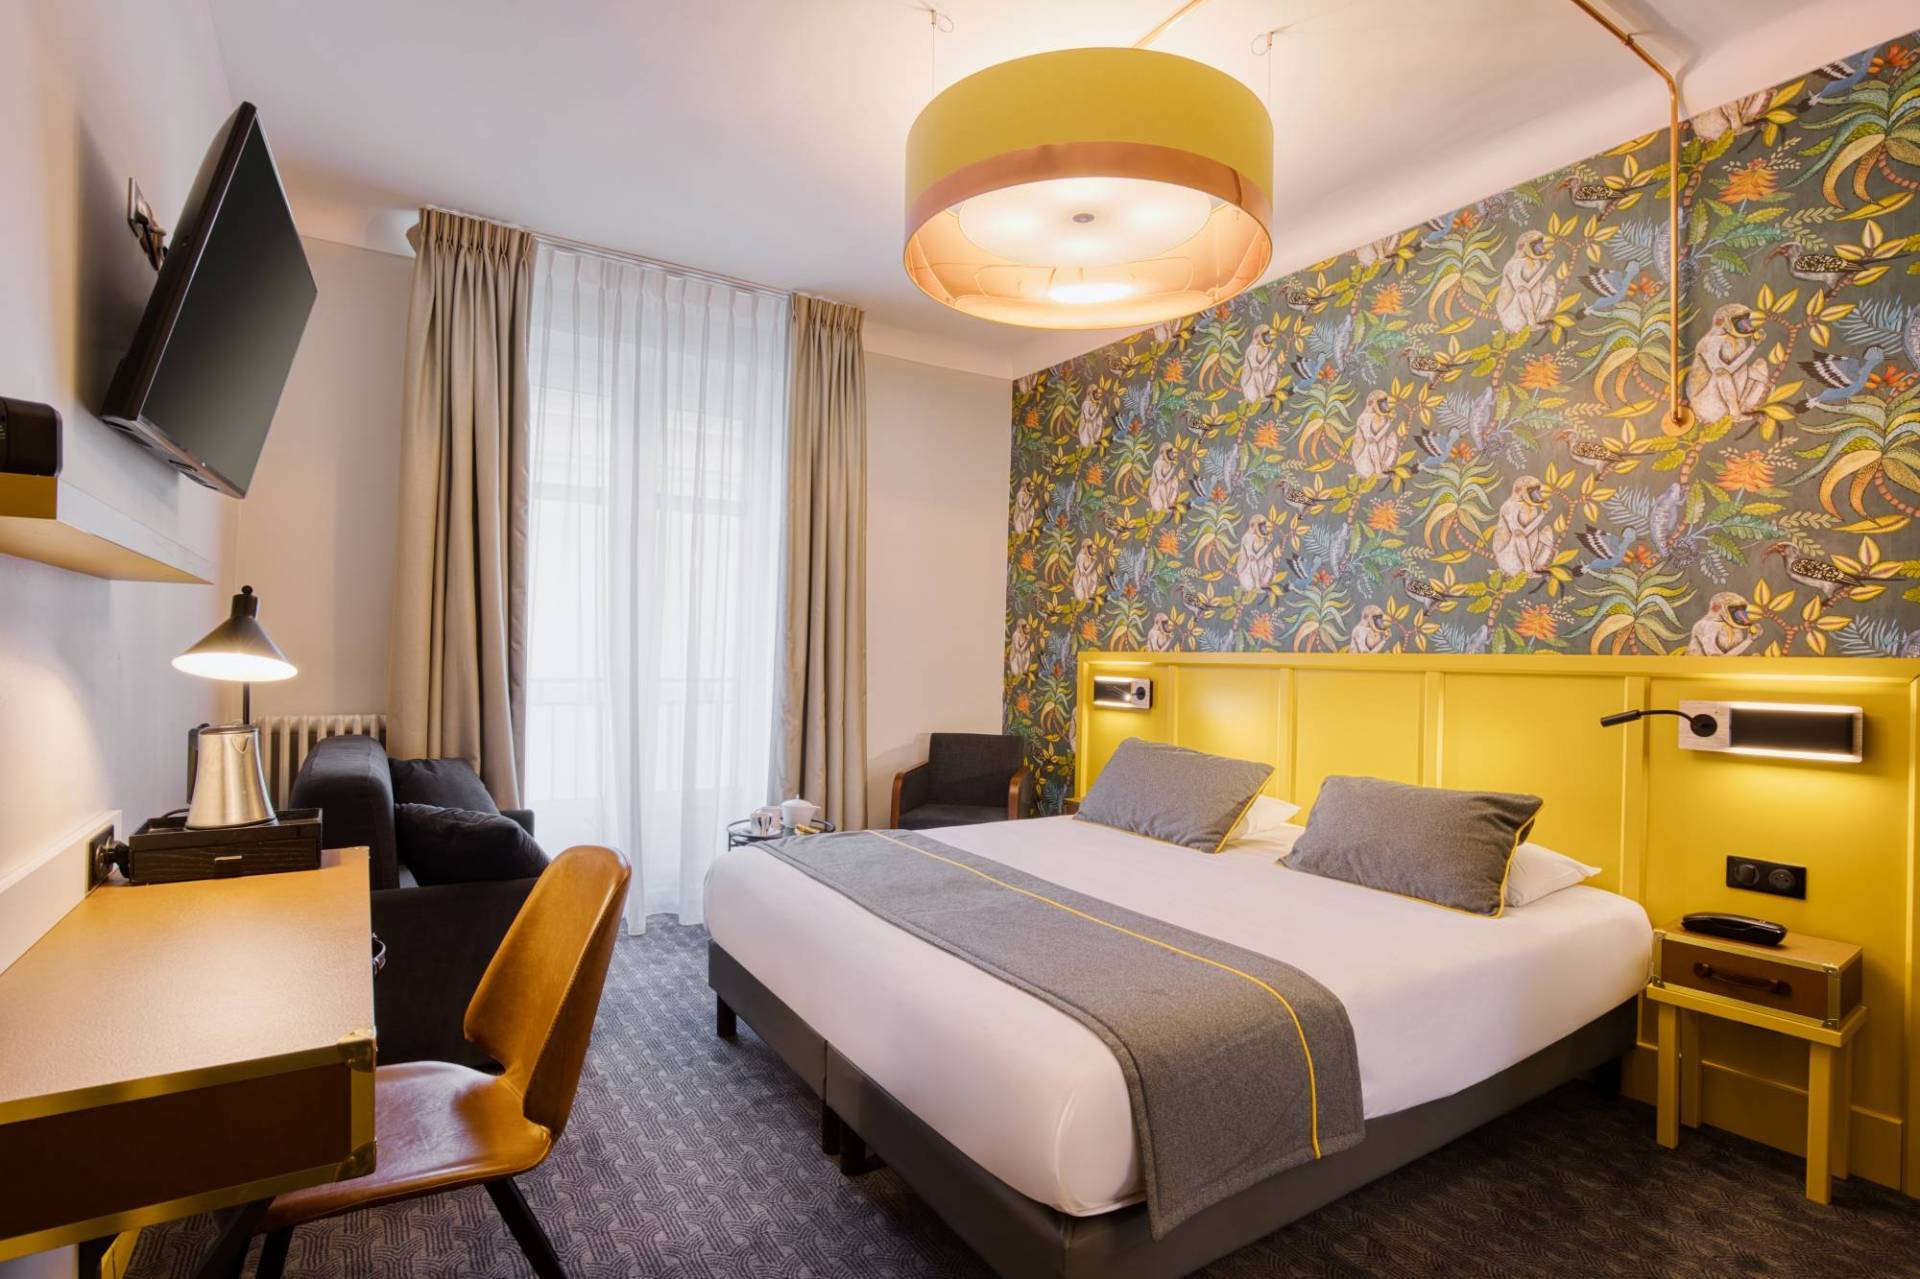 Superior room, hotel in Nantes city centre | Best Western Hôtel Graslin in Nantes